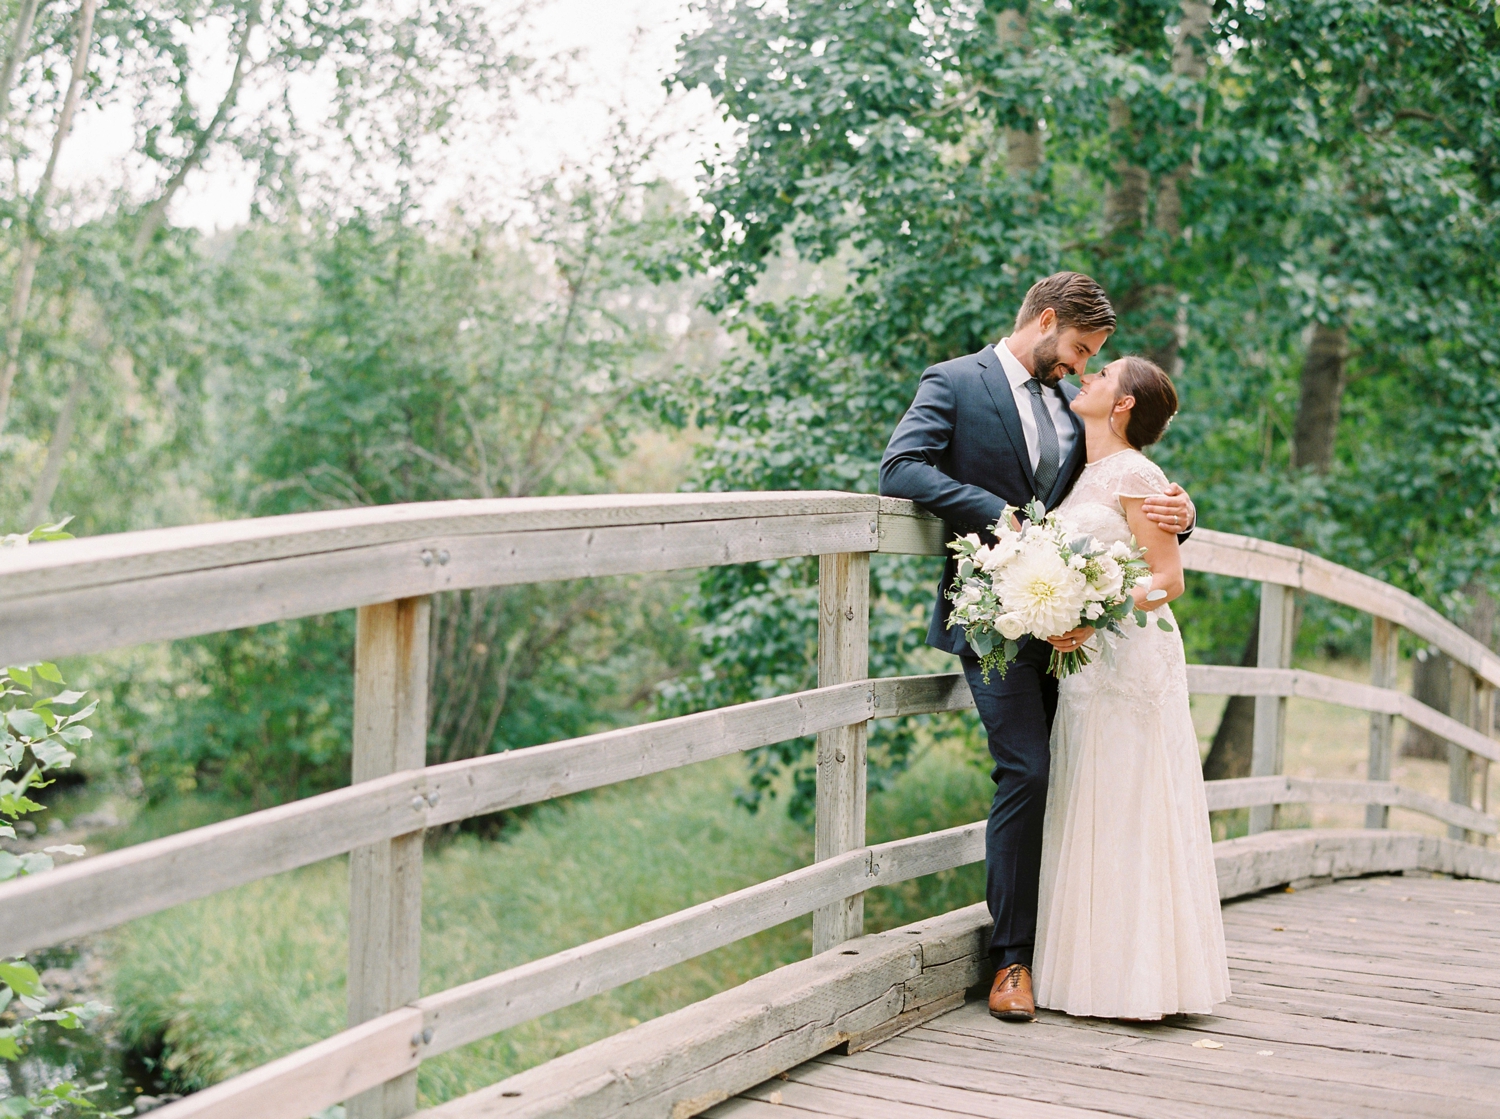 Calgary wedding photographers | fine art film | Justine Milton Photography | wedding inspiration | wedding dress | bride and groom portraits | bouquet